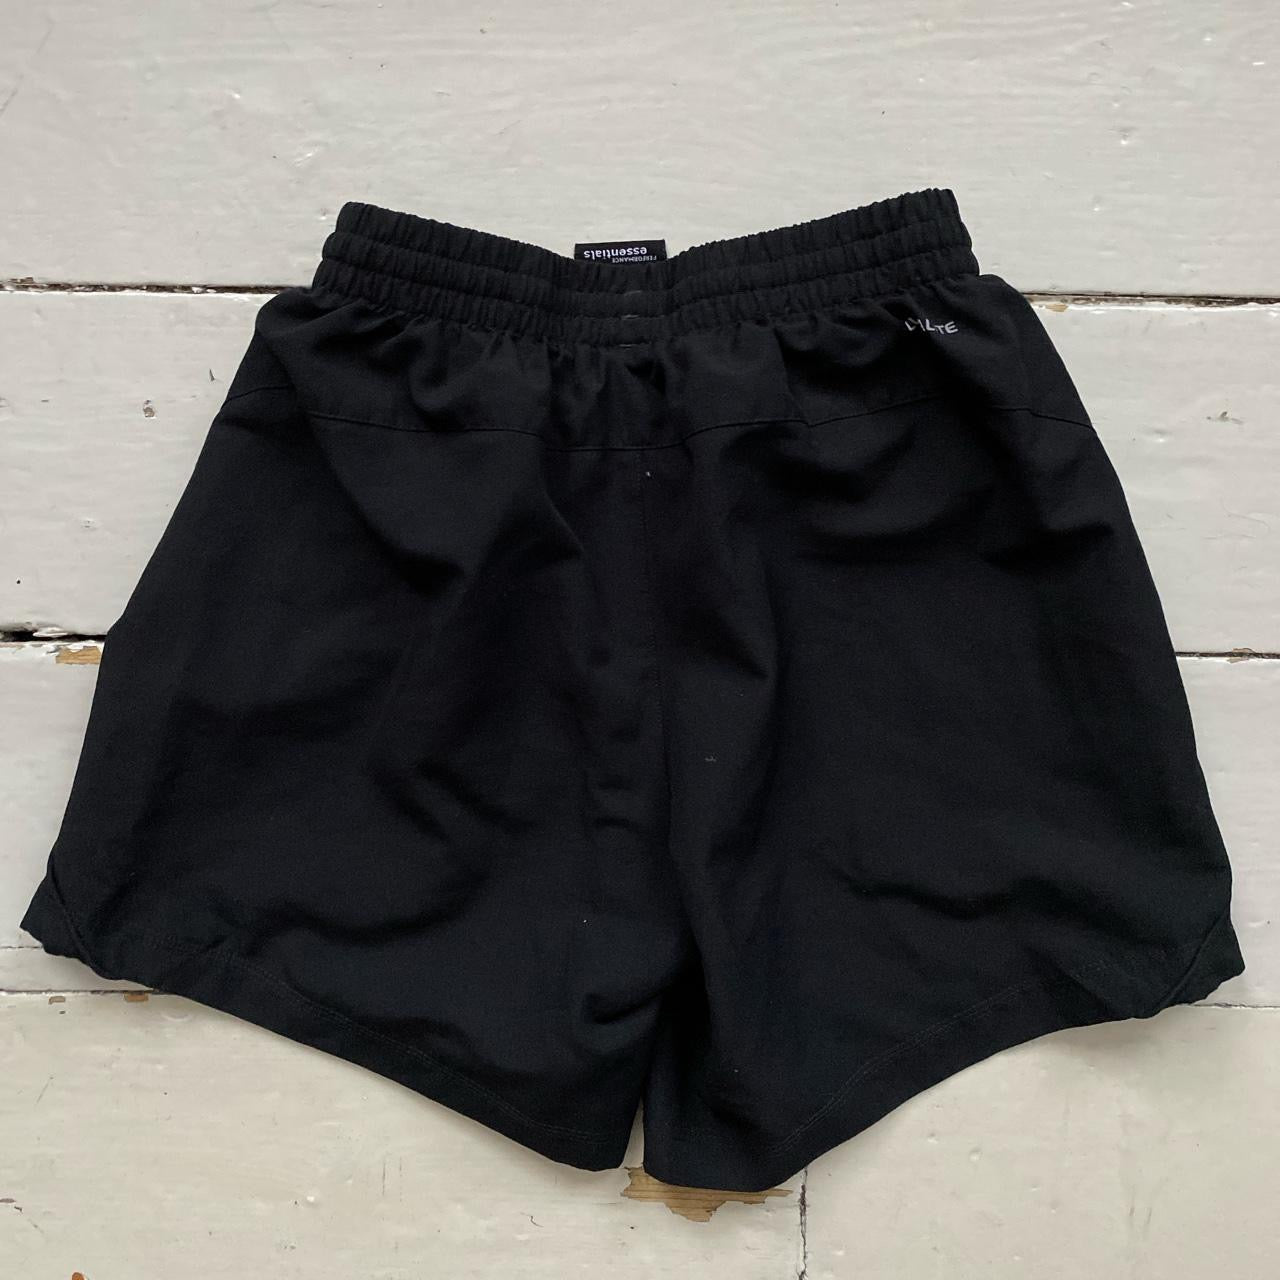 Adidas Shell Shorts (XS)